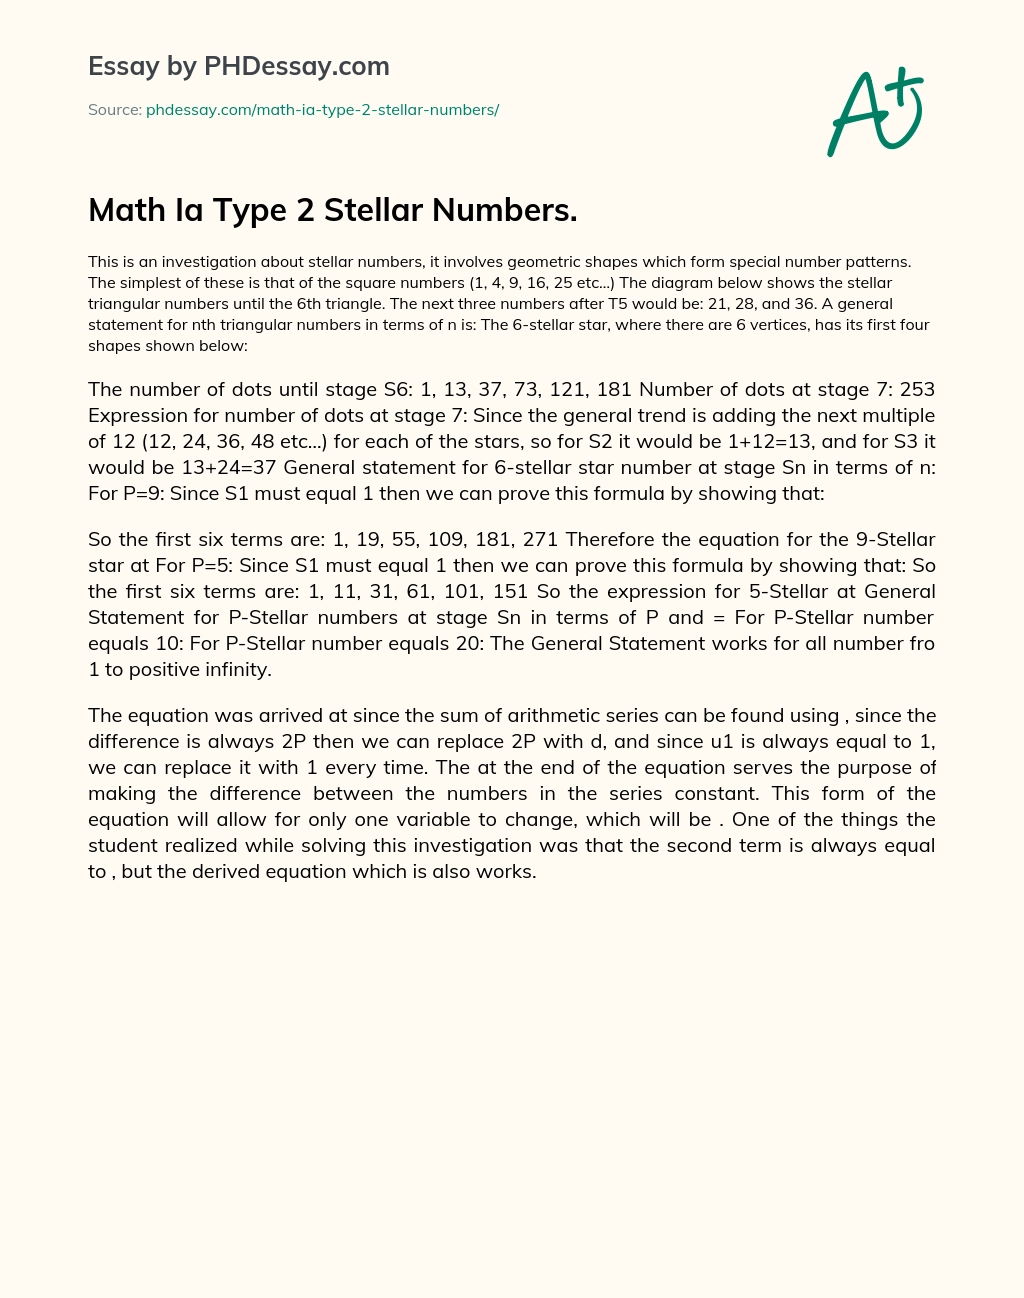 Math Ia Type 2 Stellar Numbers. essay